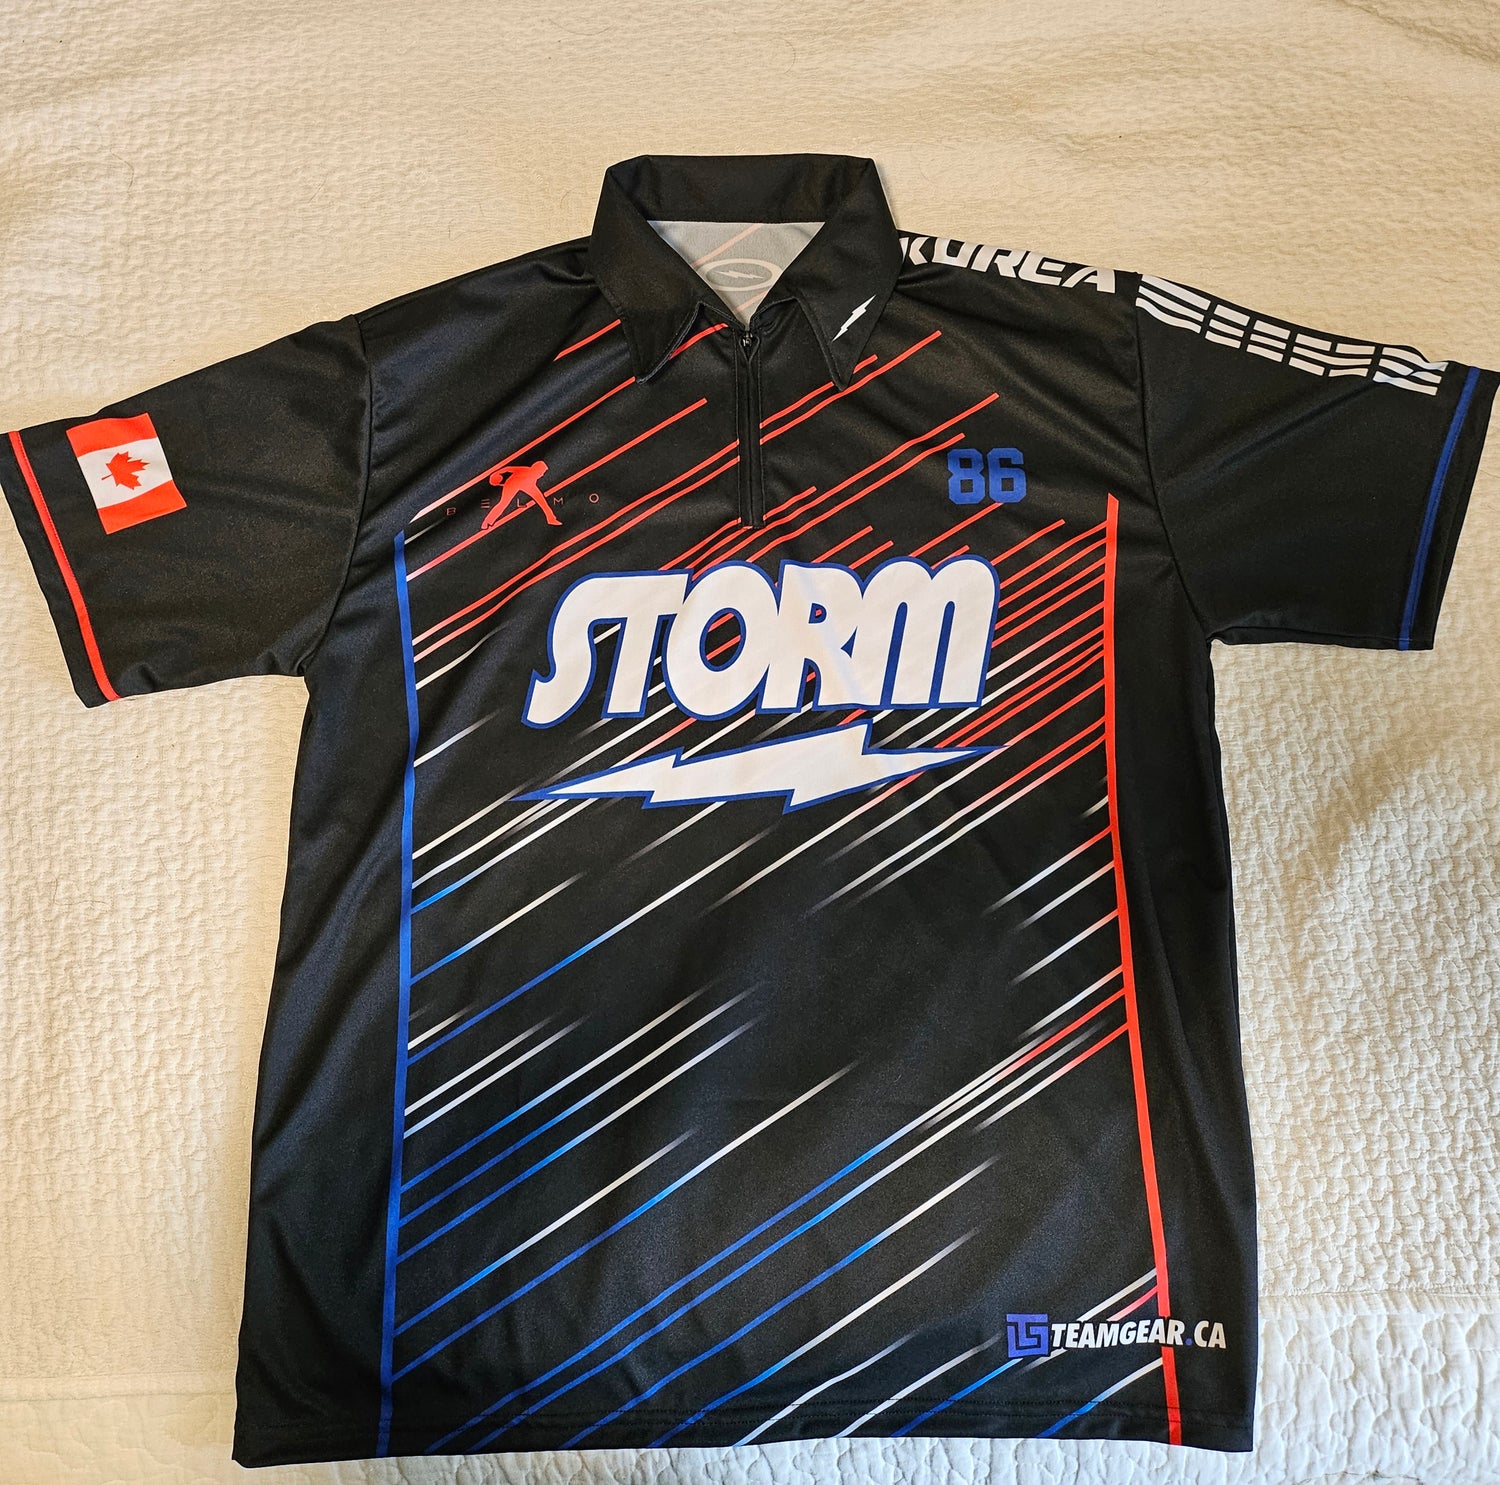 custom storm bowling jersey for Team Korea fan made in Canada